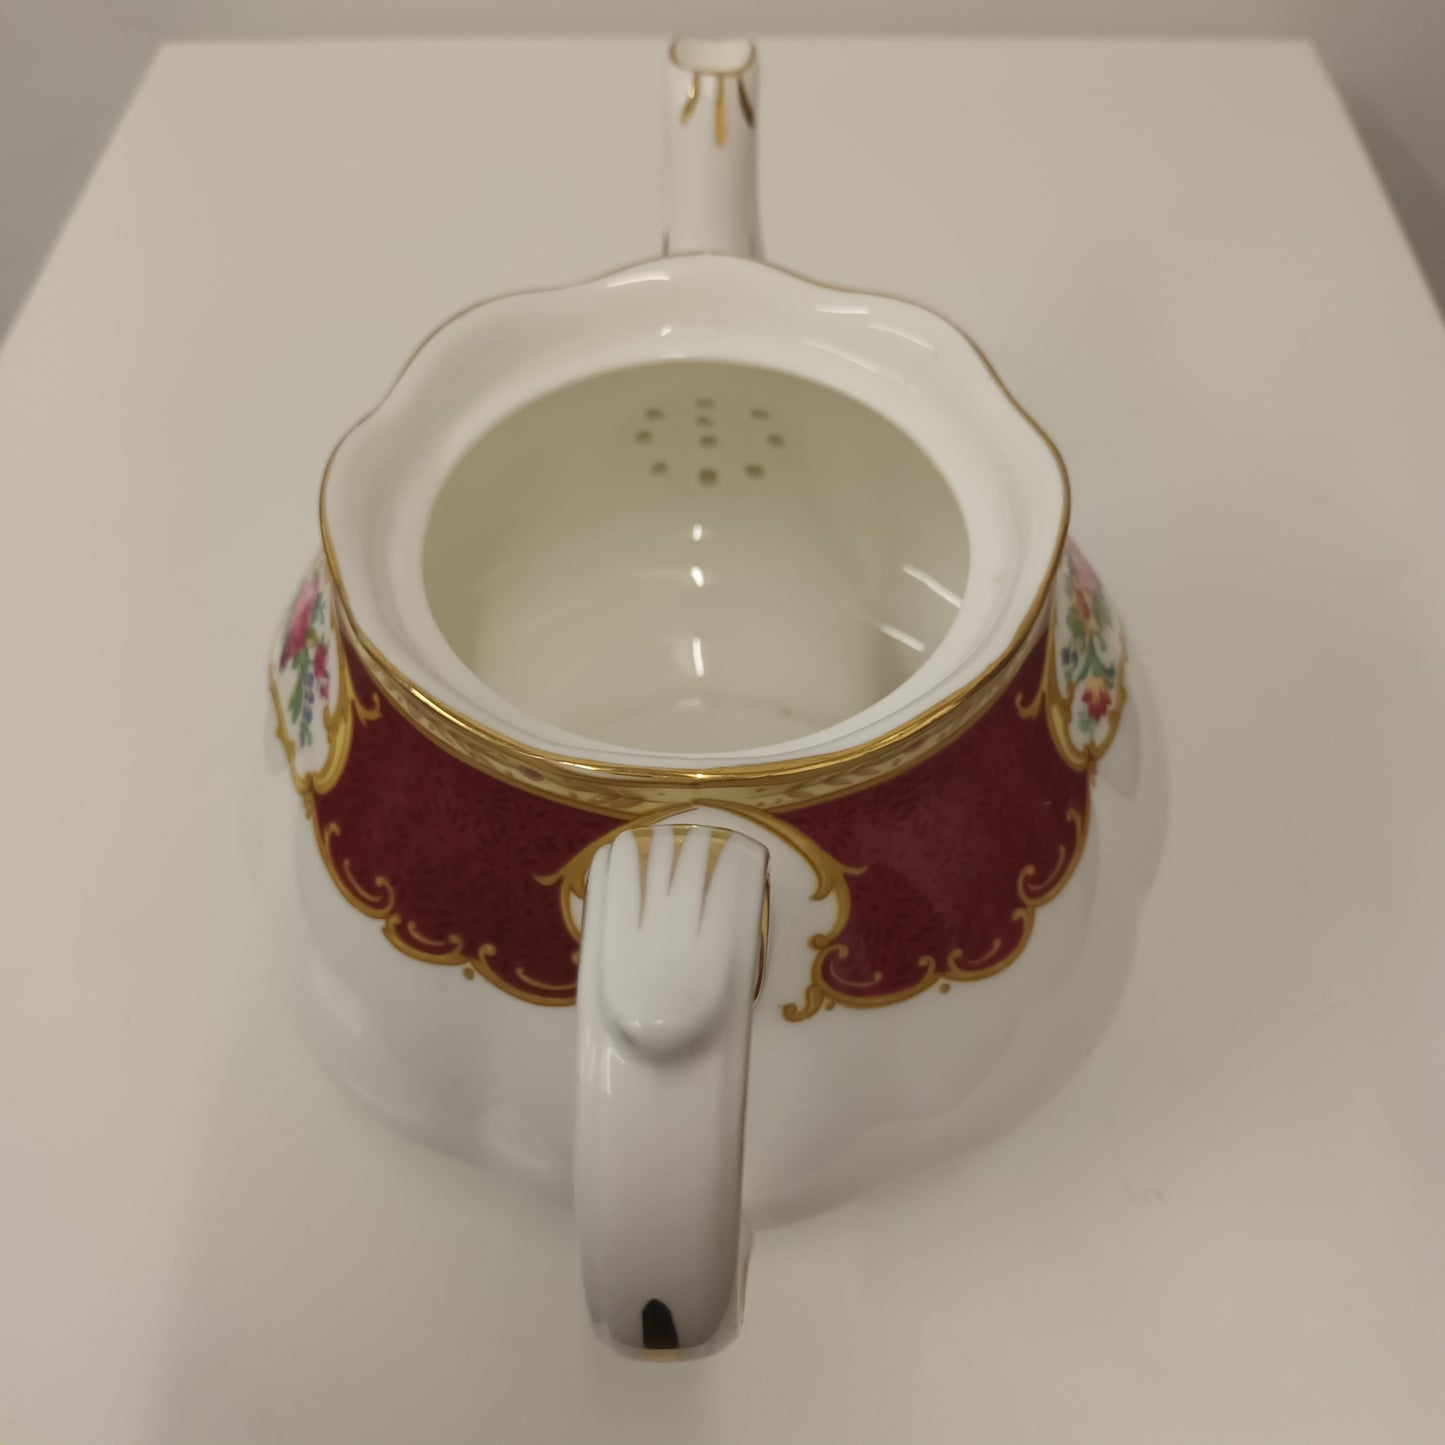 Royal Albert Lady Hamilton Large Teapot